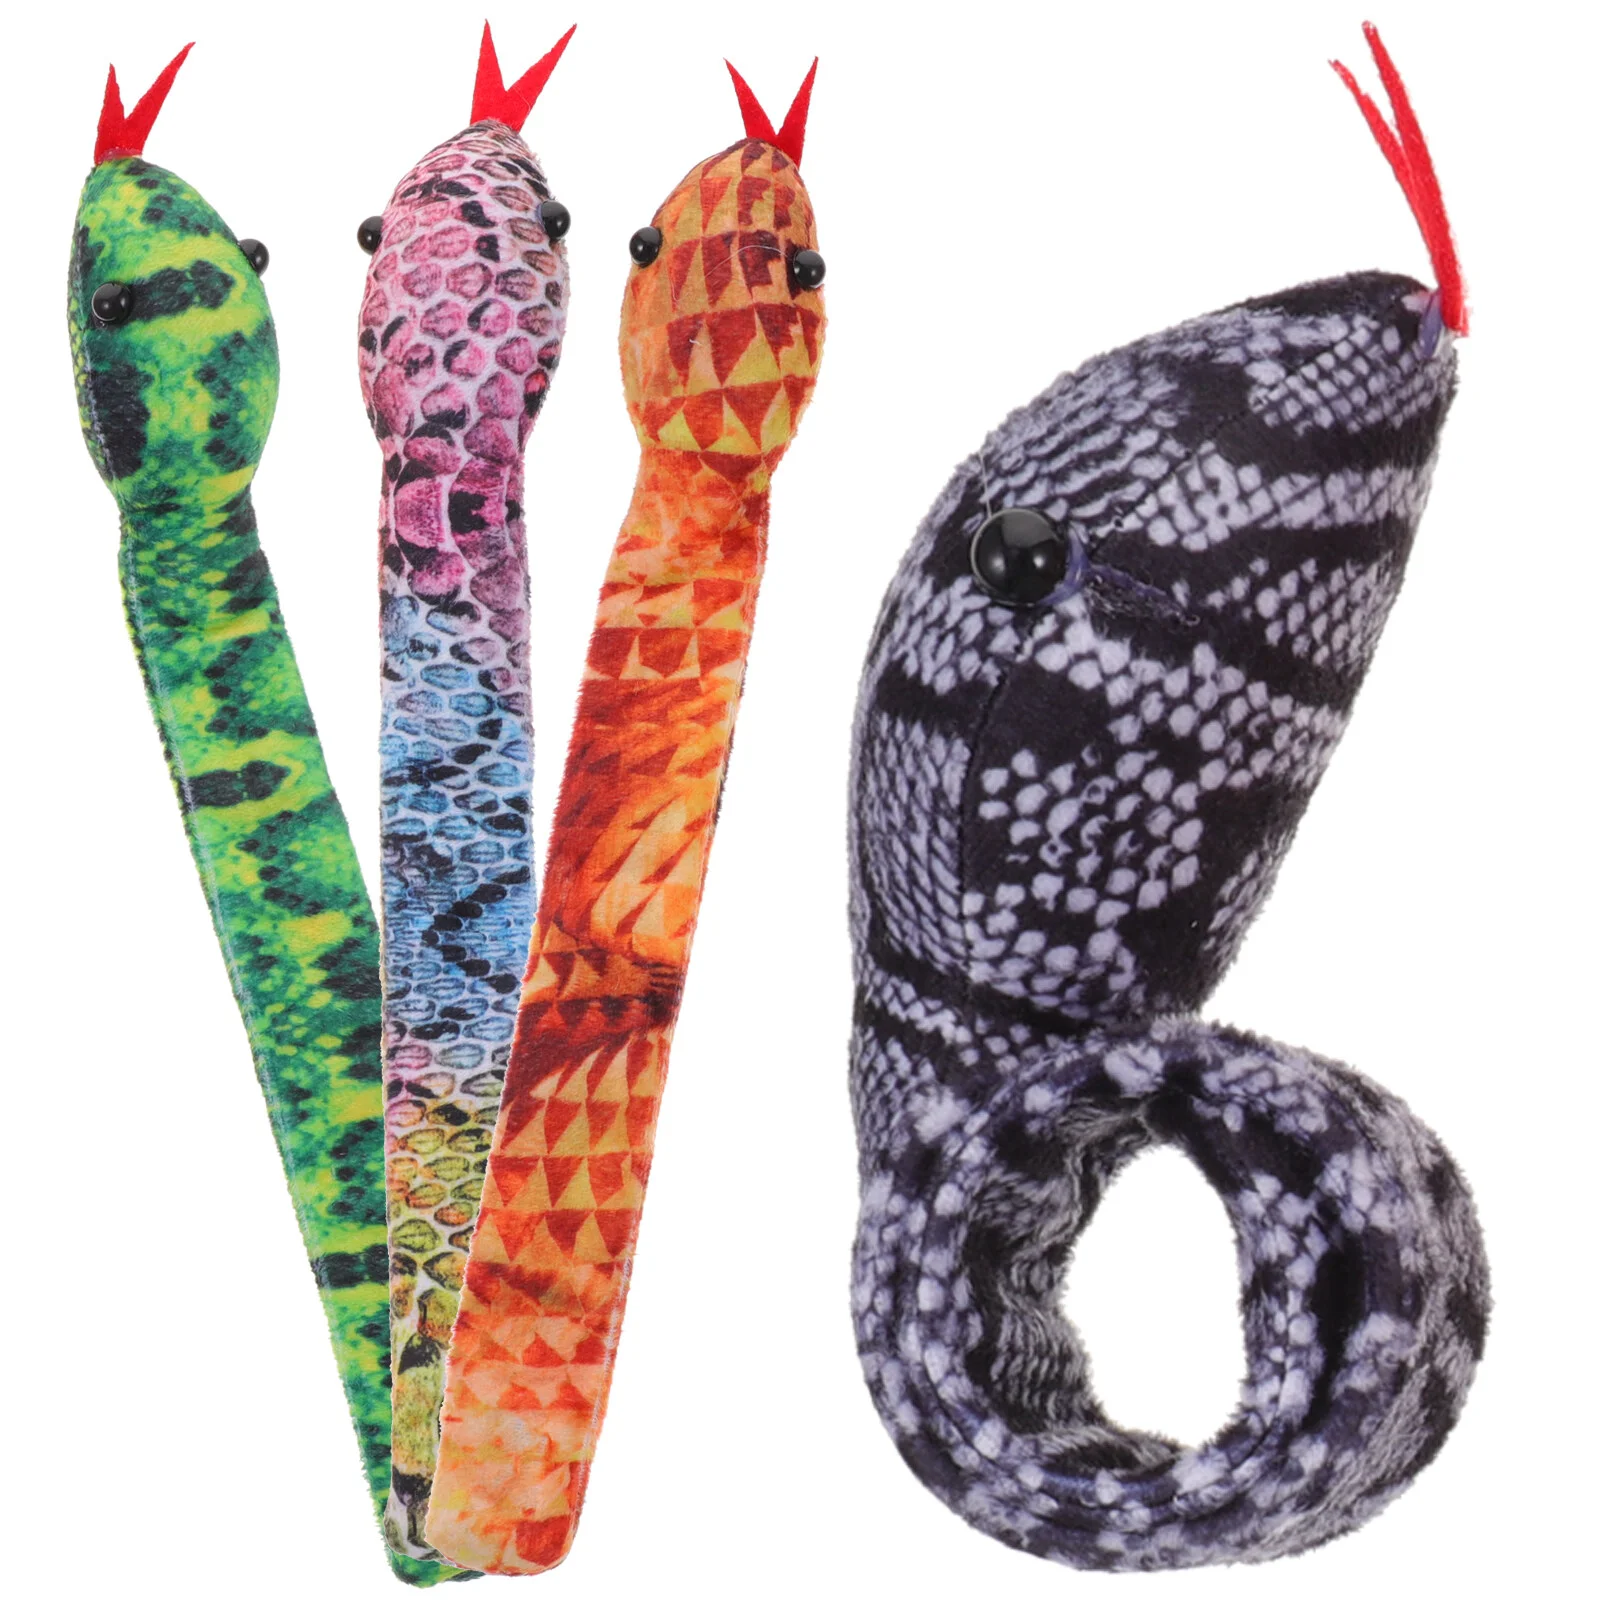 

Plush Toy Snakes That Look Real Slap Bracelets Bulk Stocking Stuffers Animals Prank Party Favors